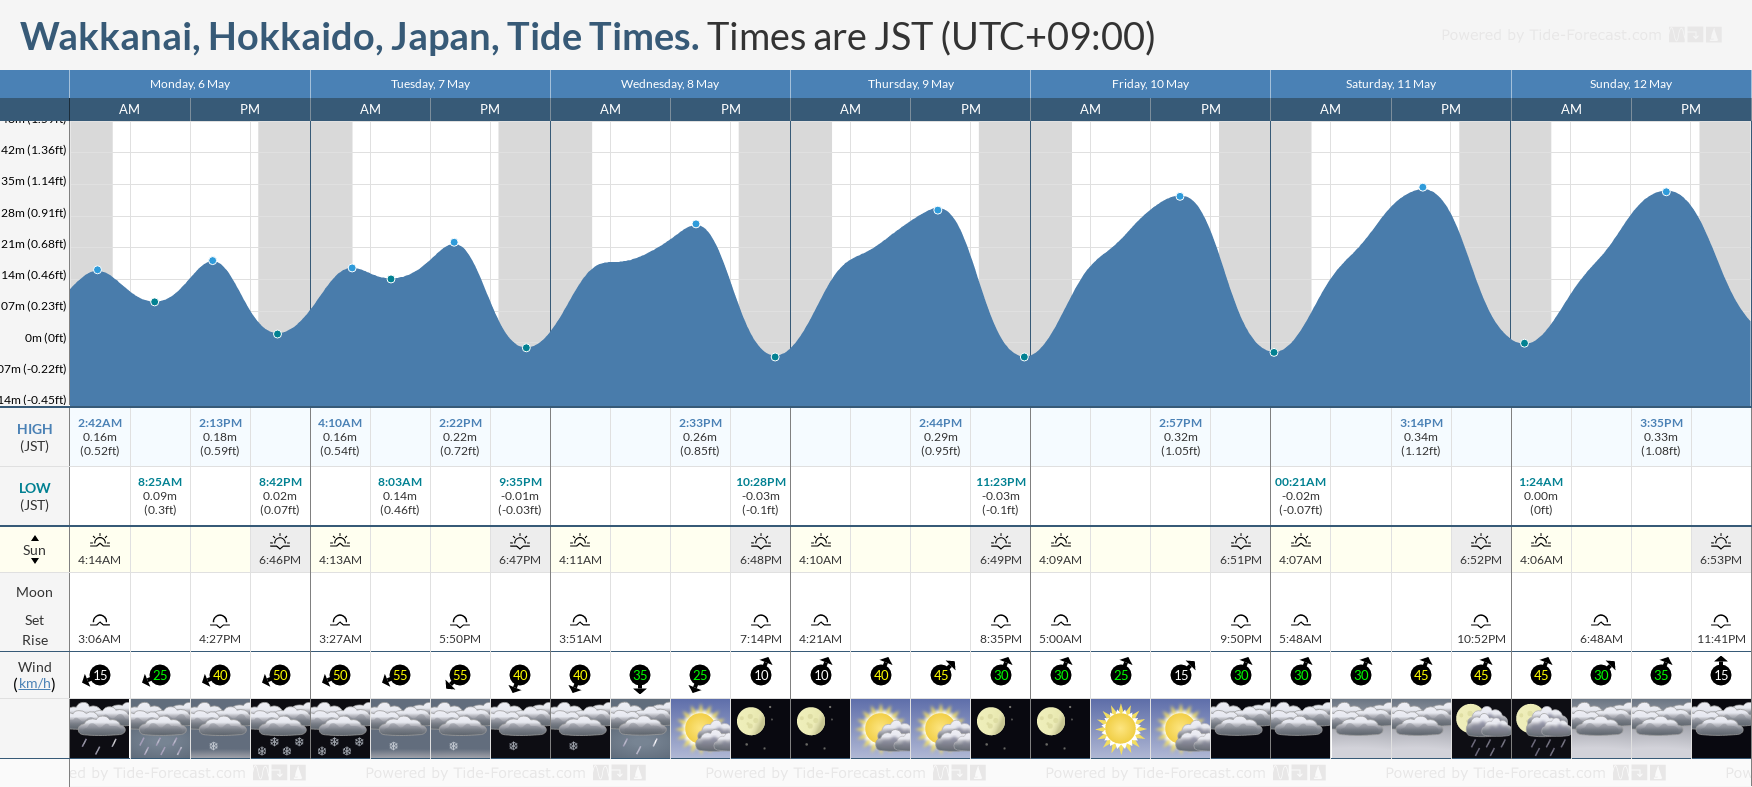 Wakkanai, Hokkaido, Japan Tide Chart including high and low tide tide times for the next 7 days